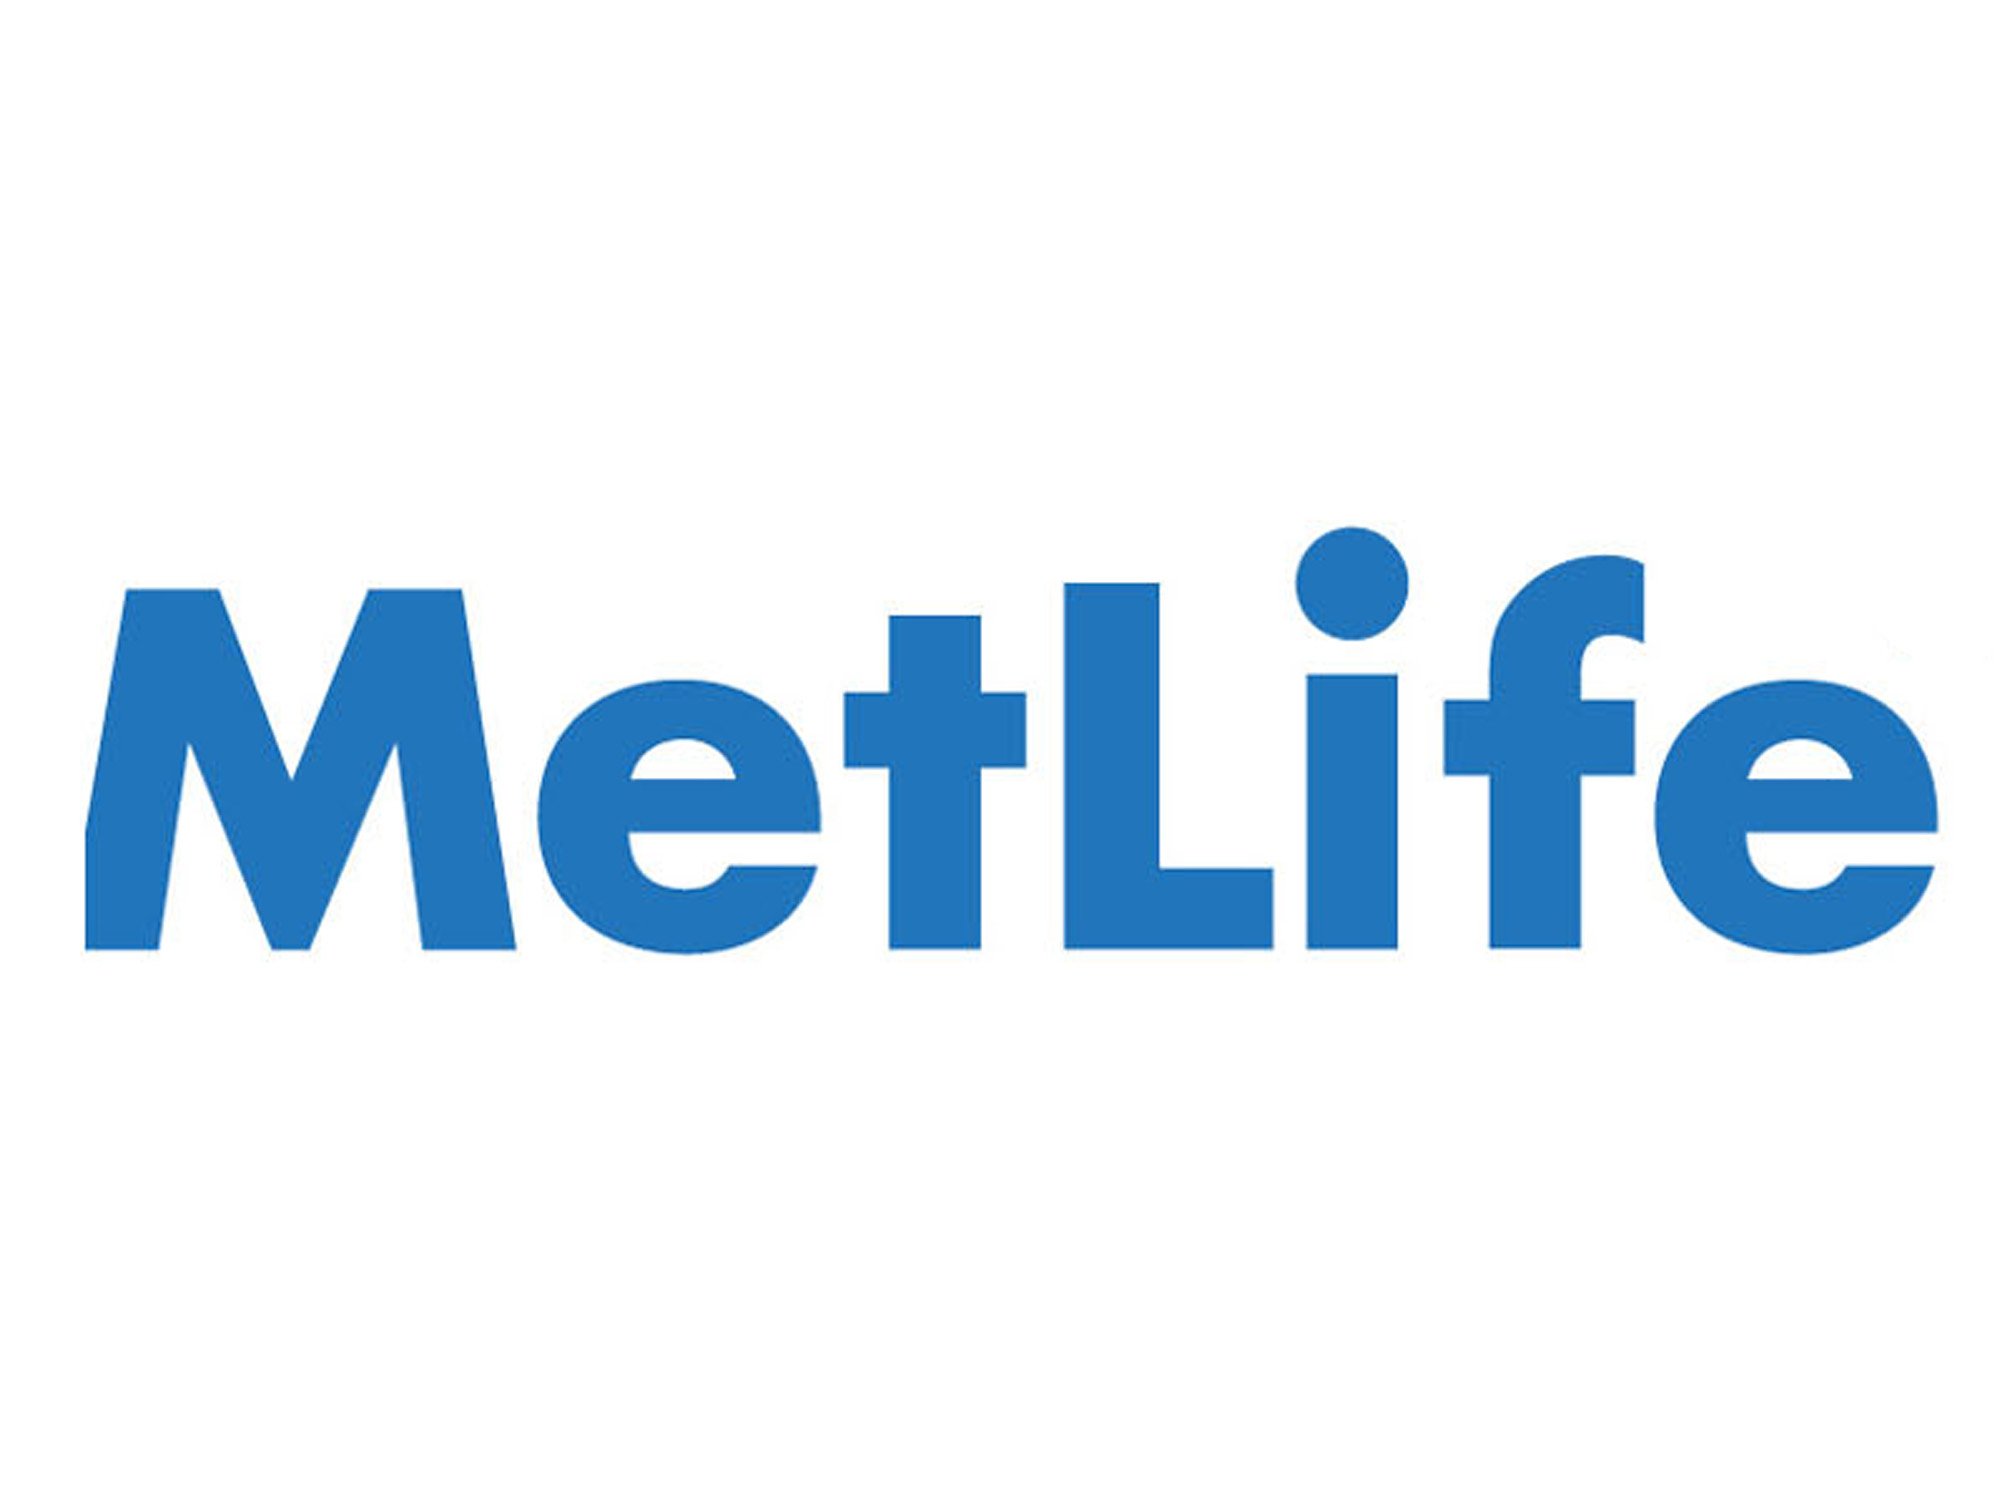 MetLife, 34 states reach settlement near 500 million CBS News